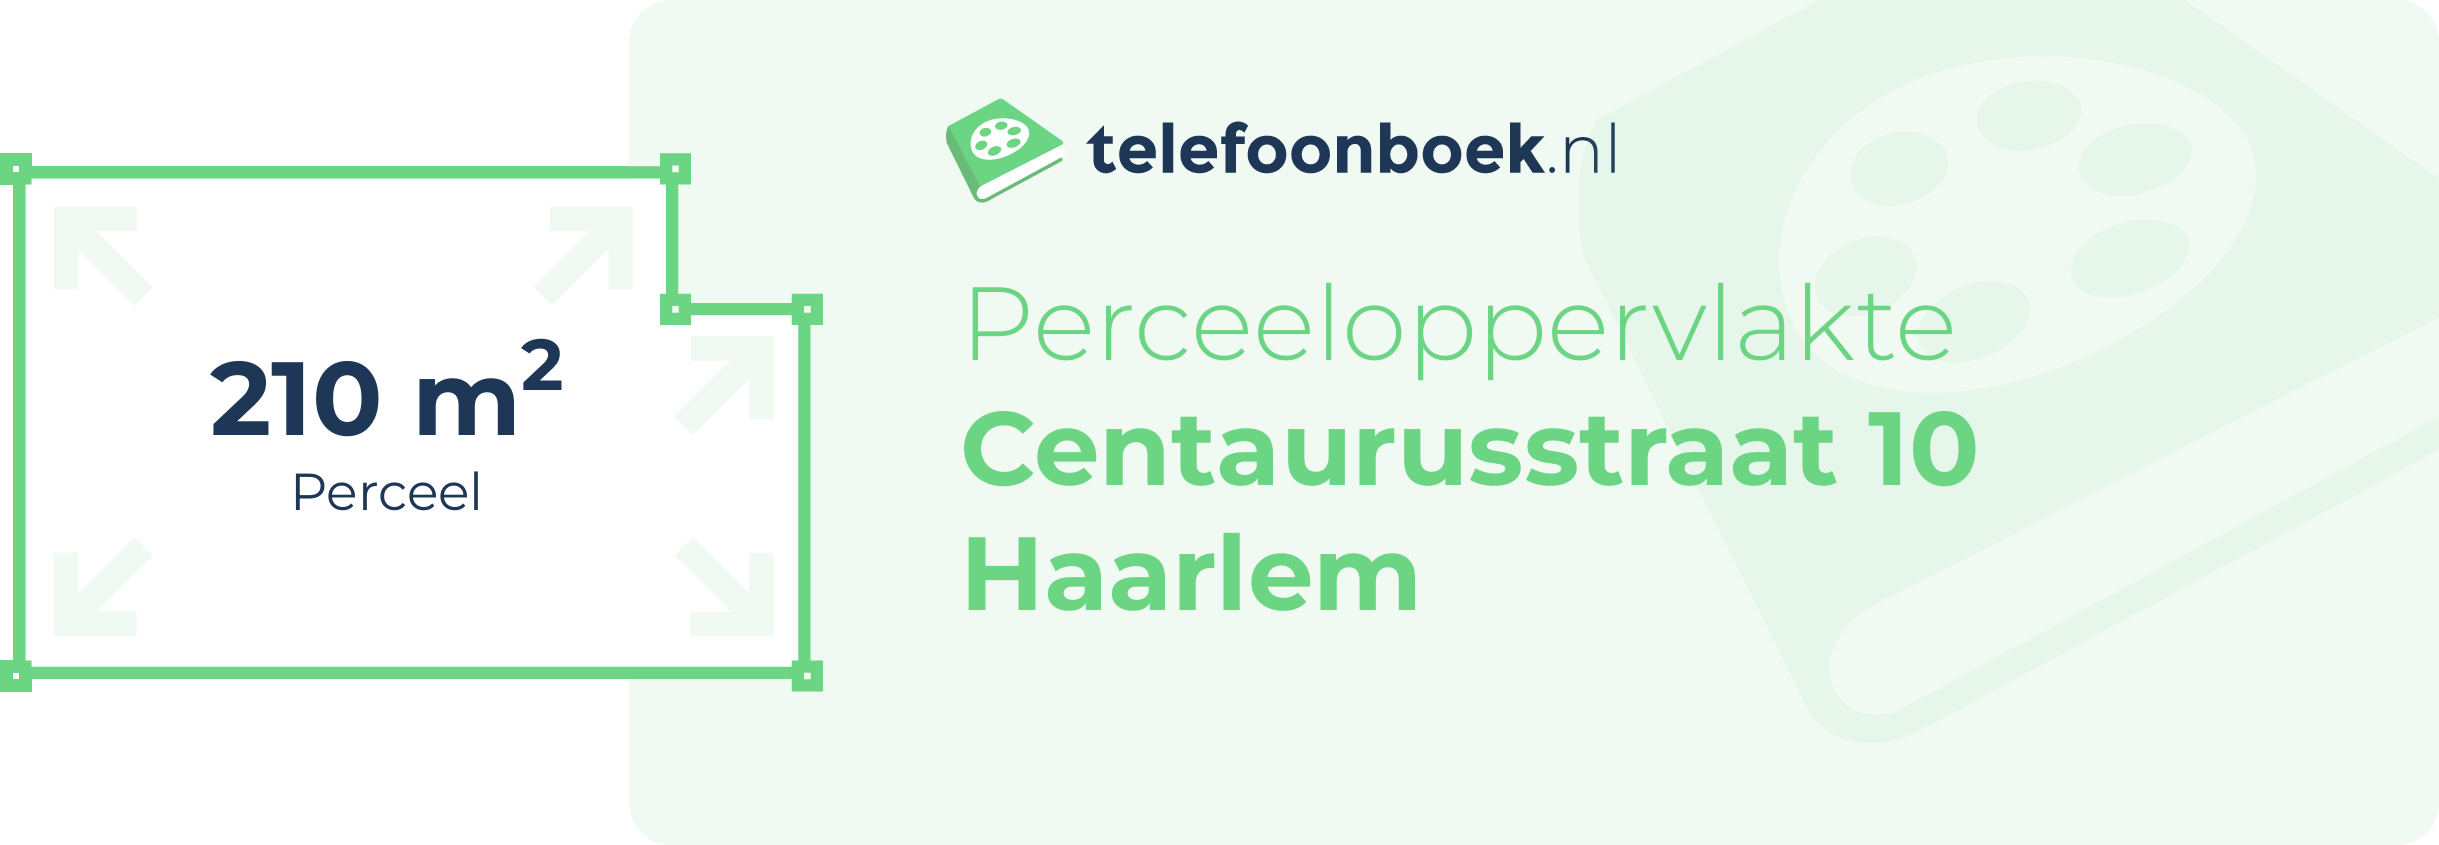 Perceeloppervlakte Centaurusstraat 10 Haarlem